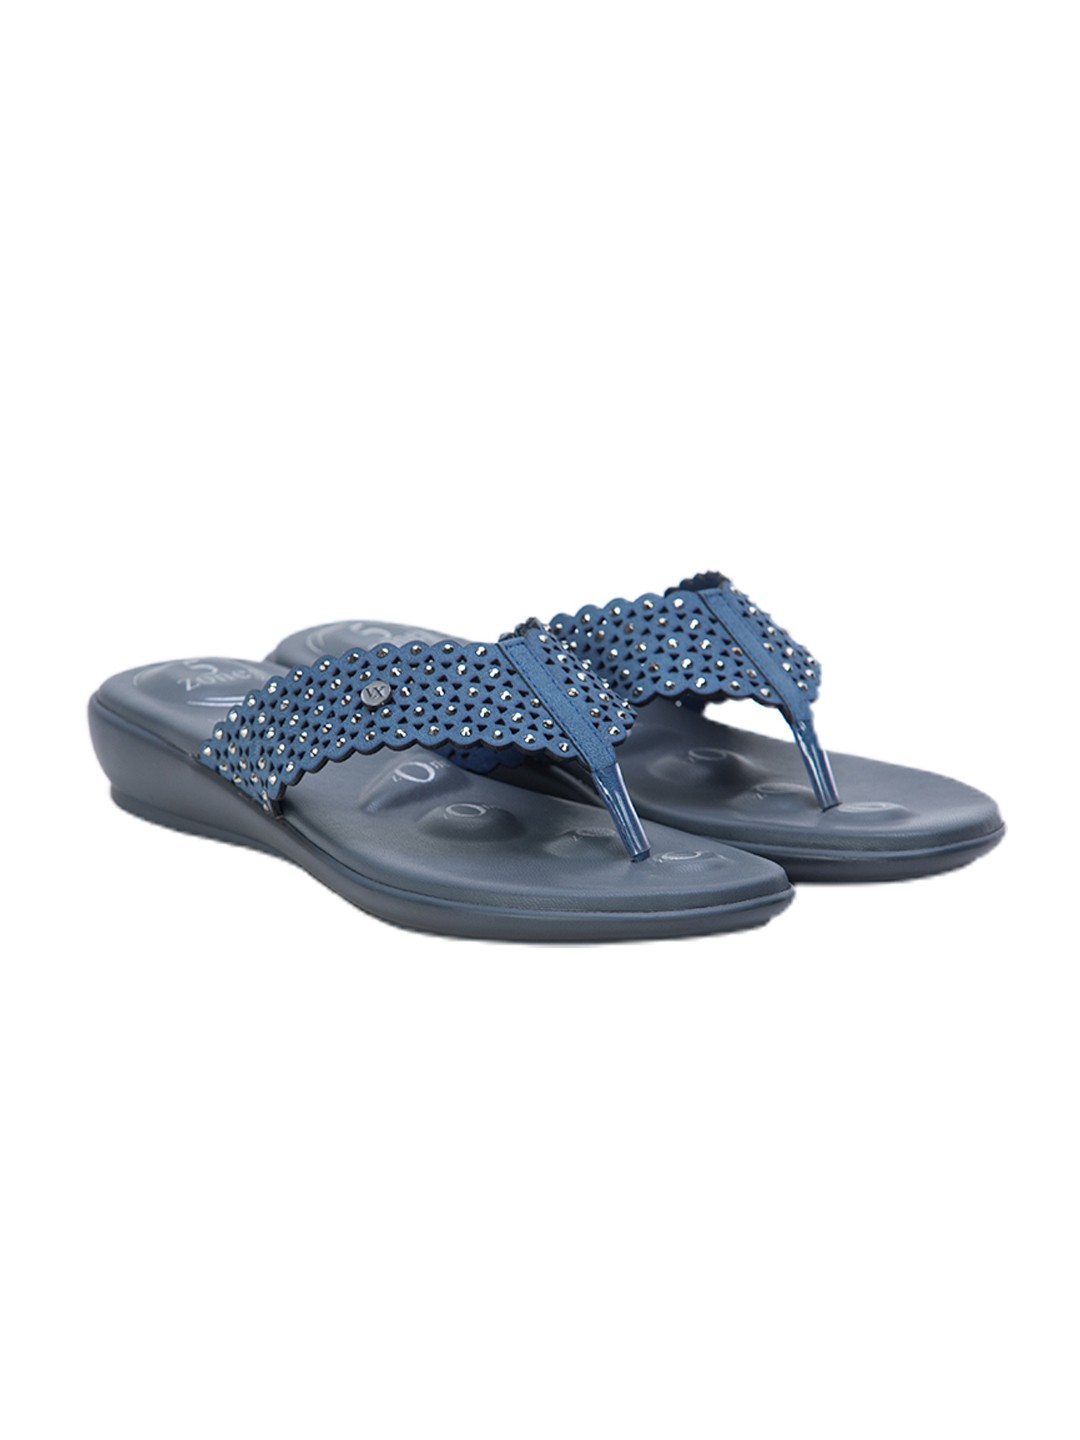 Buy Von Wellx Germany Comfort Gleam Blue Slippers Online in Ranchi